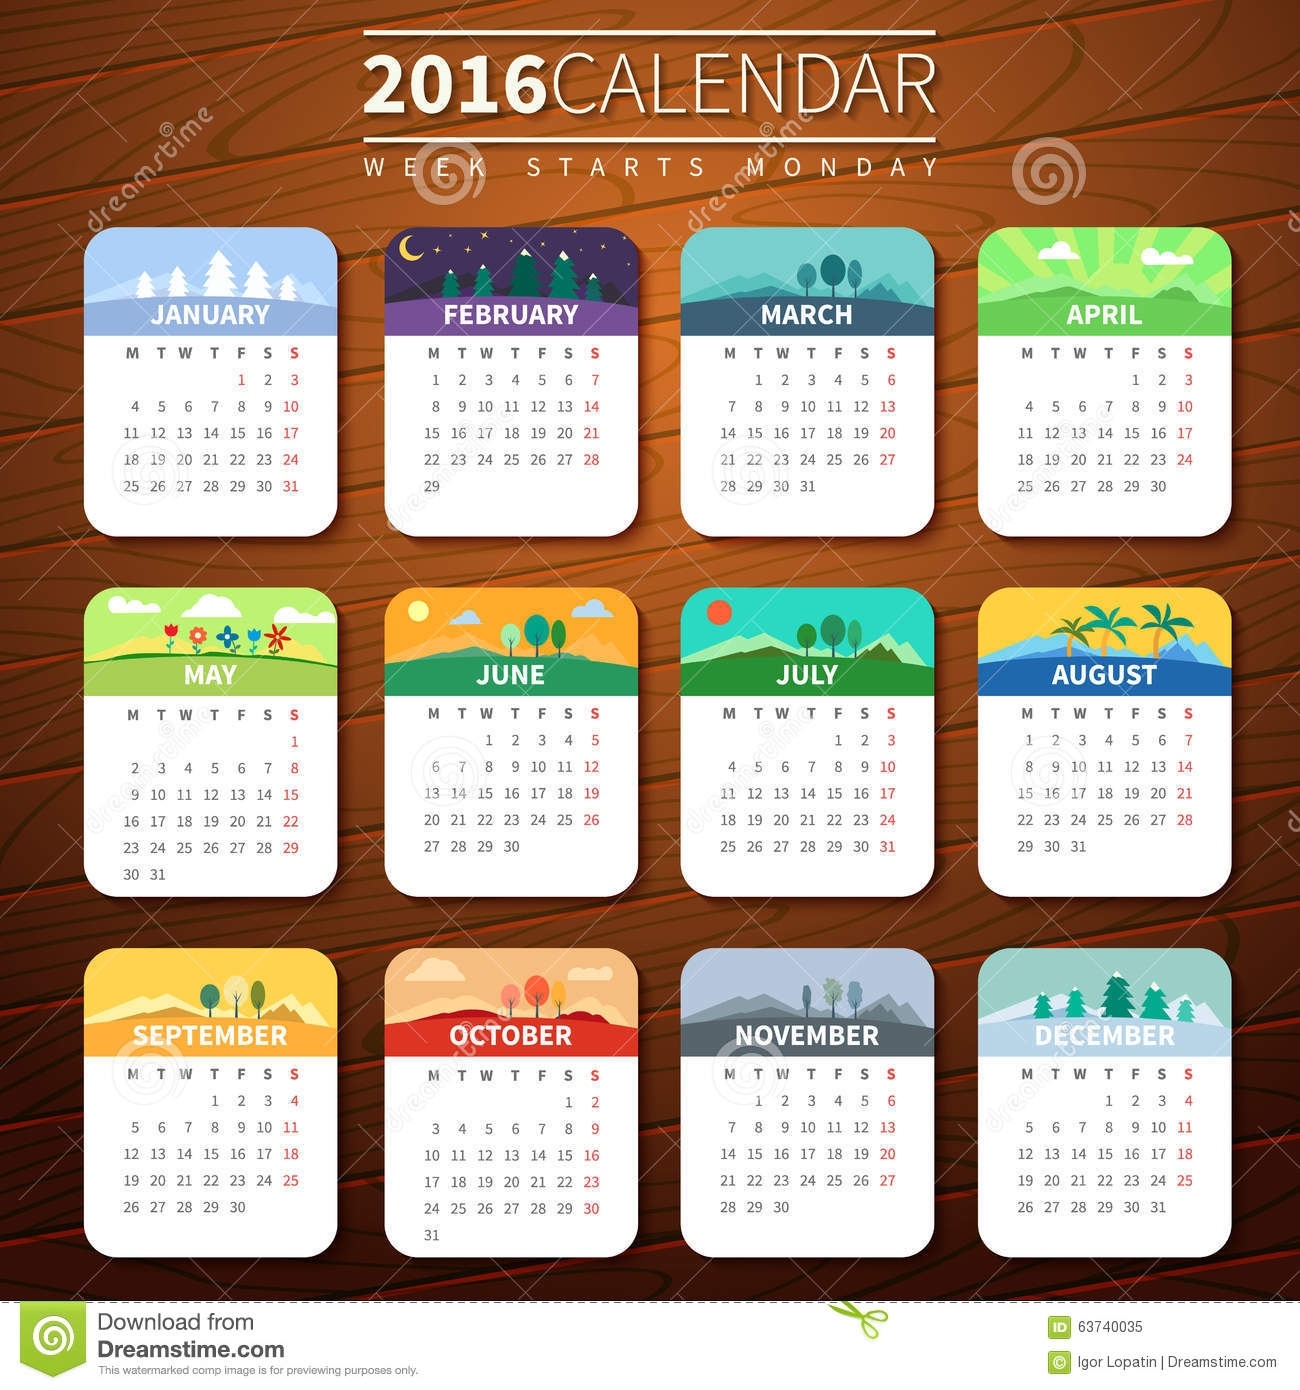 Seasonal Calendar Template - Seckin.ayodhya.co 4 Seasons Calendar Template